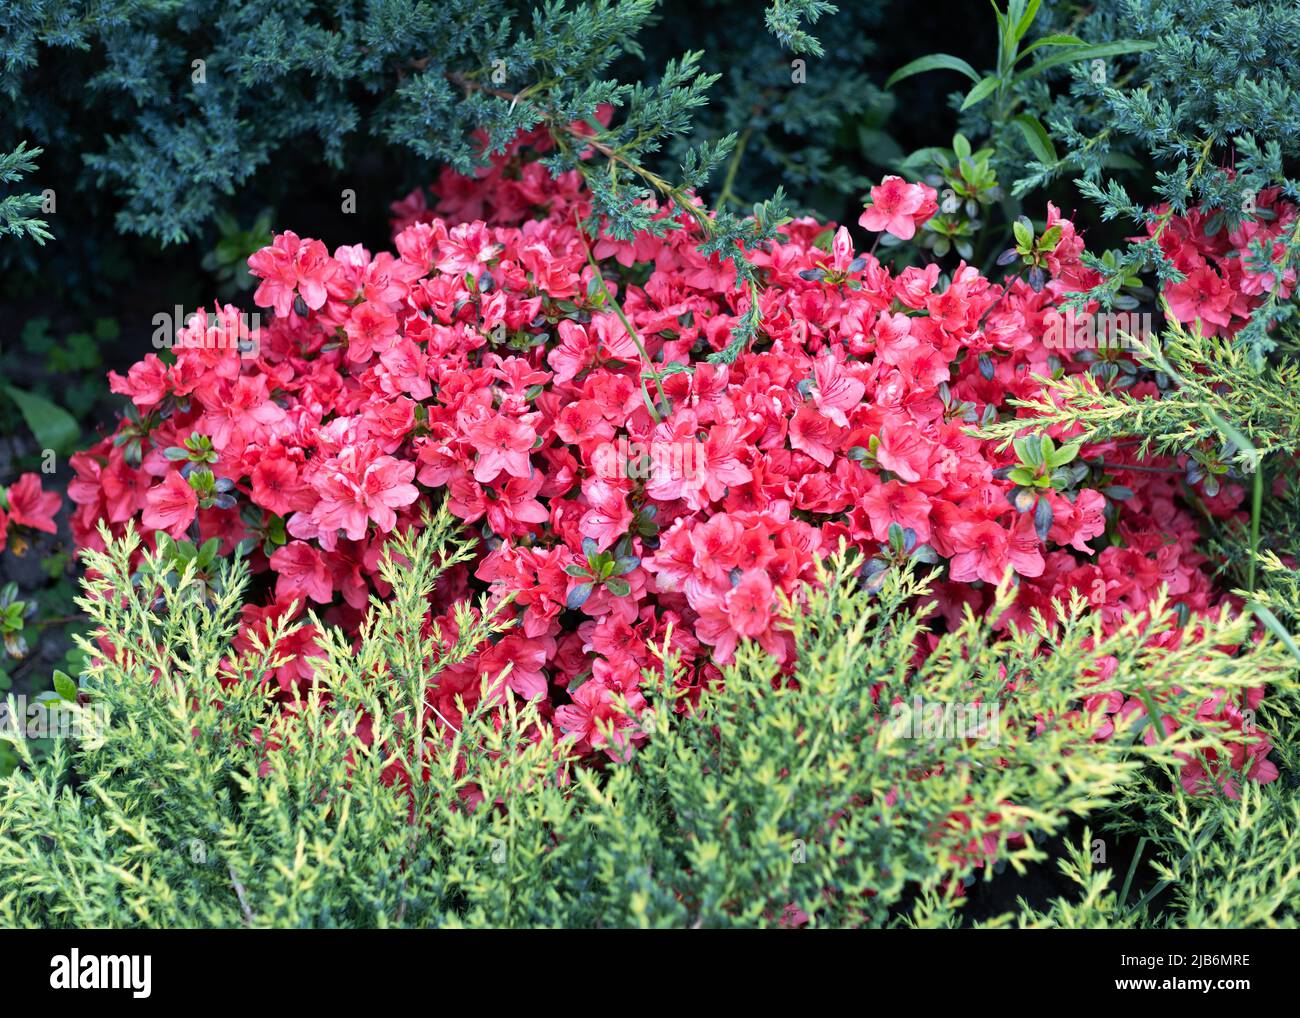 Blooming red azalea in evergreen juniper bushes. Spring garden composition. Stock Photo